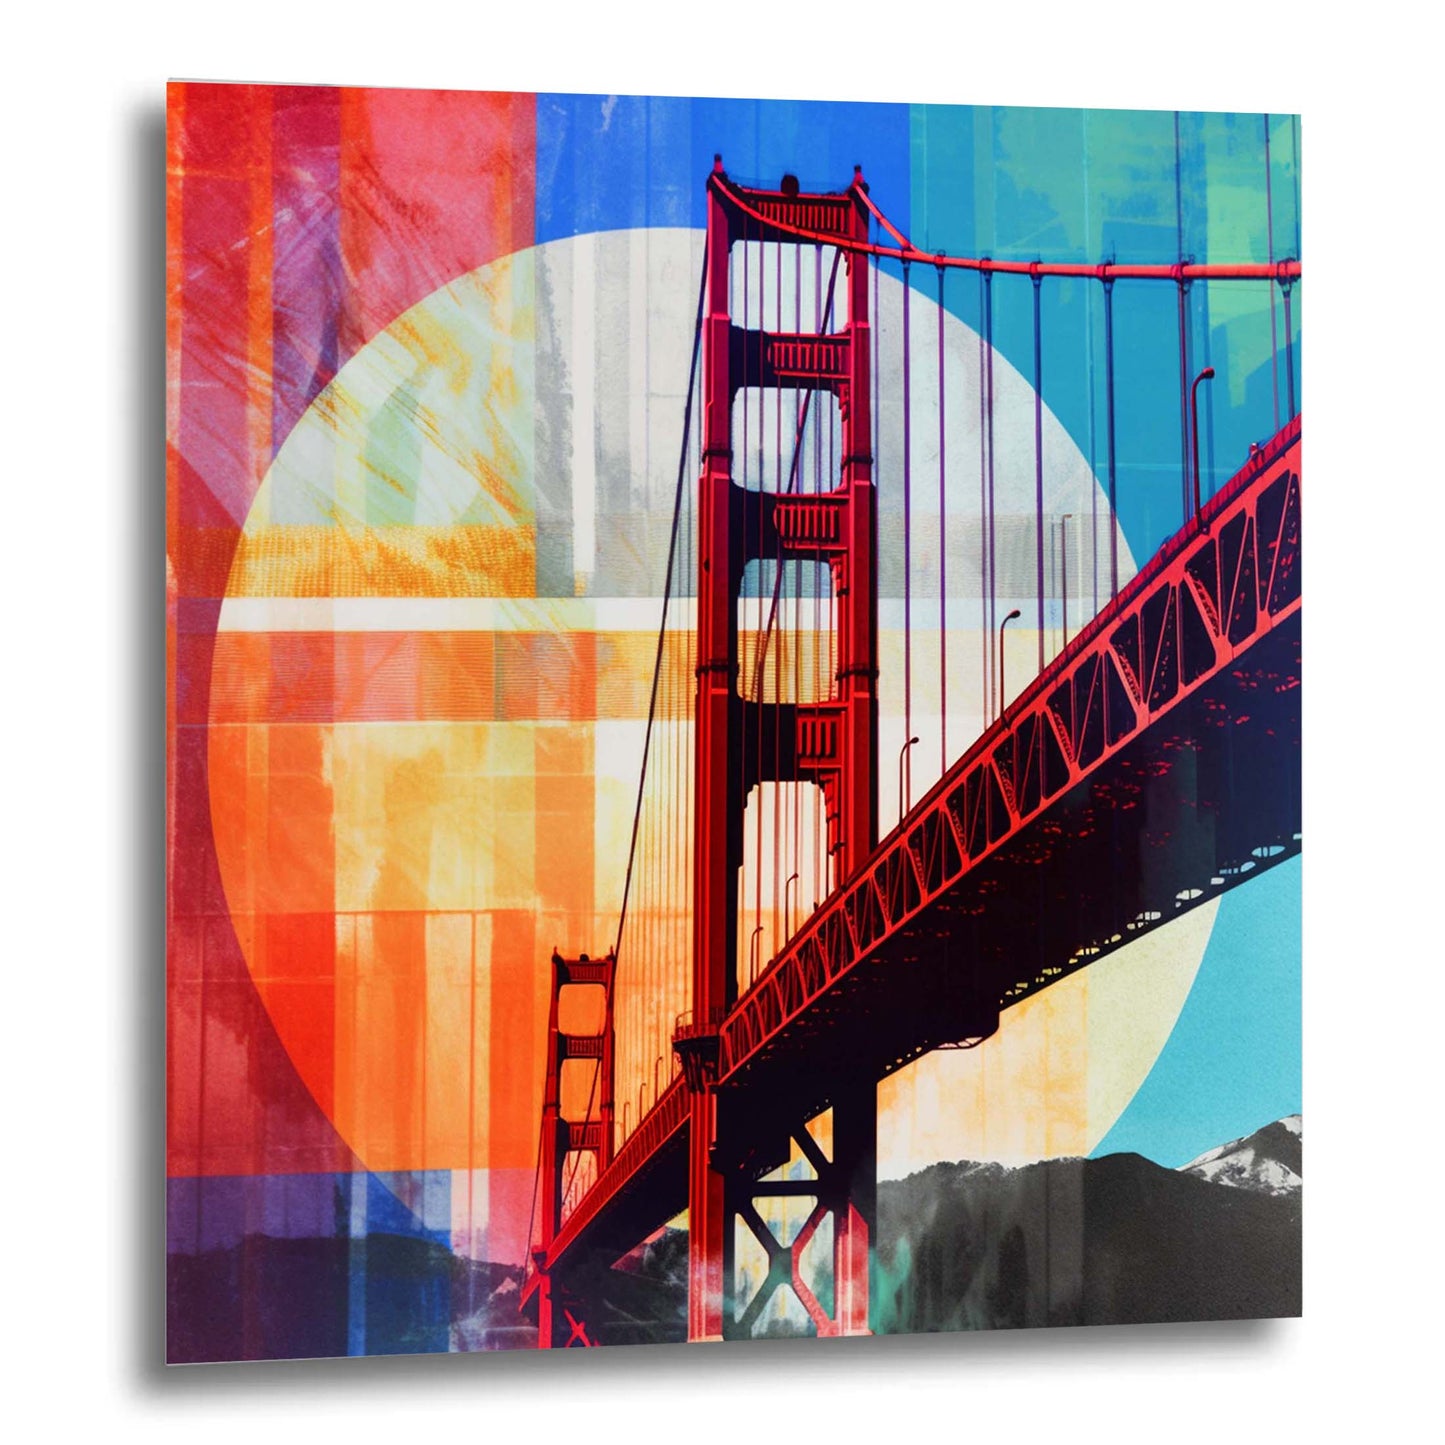 San Francisco Golden Gate Bridge - mural in the style of pop art